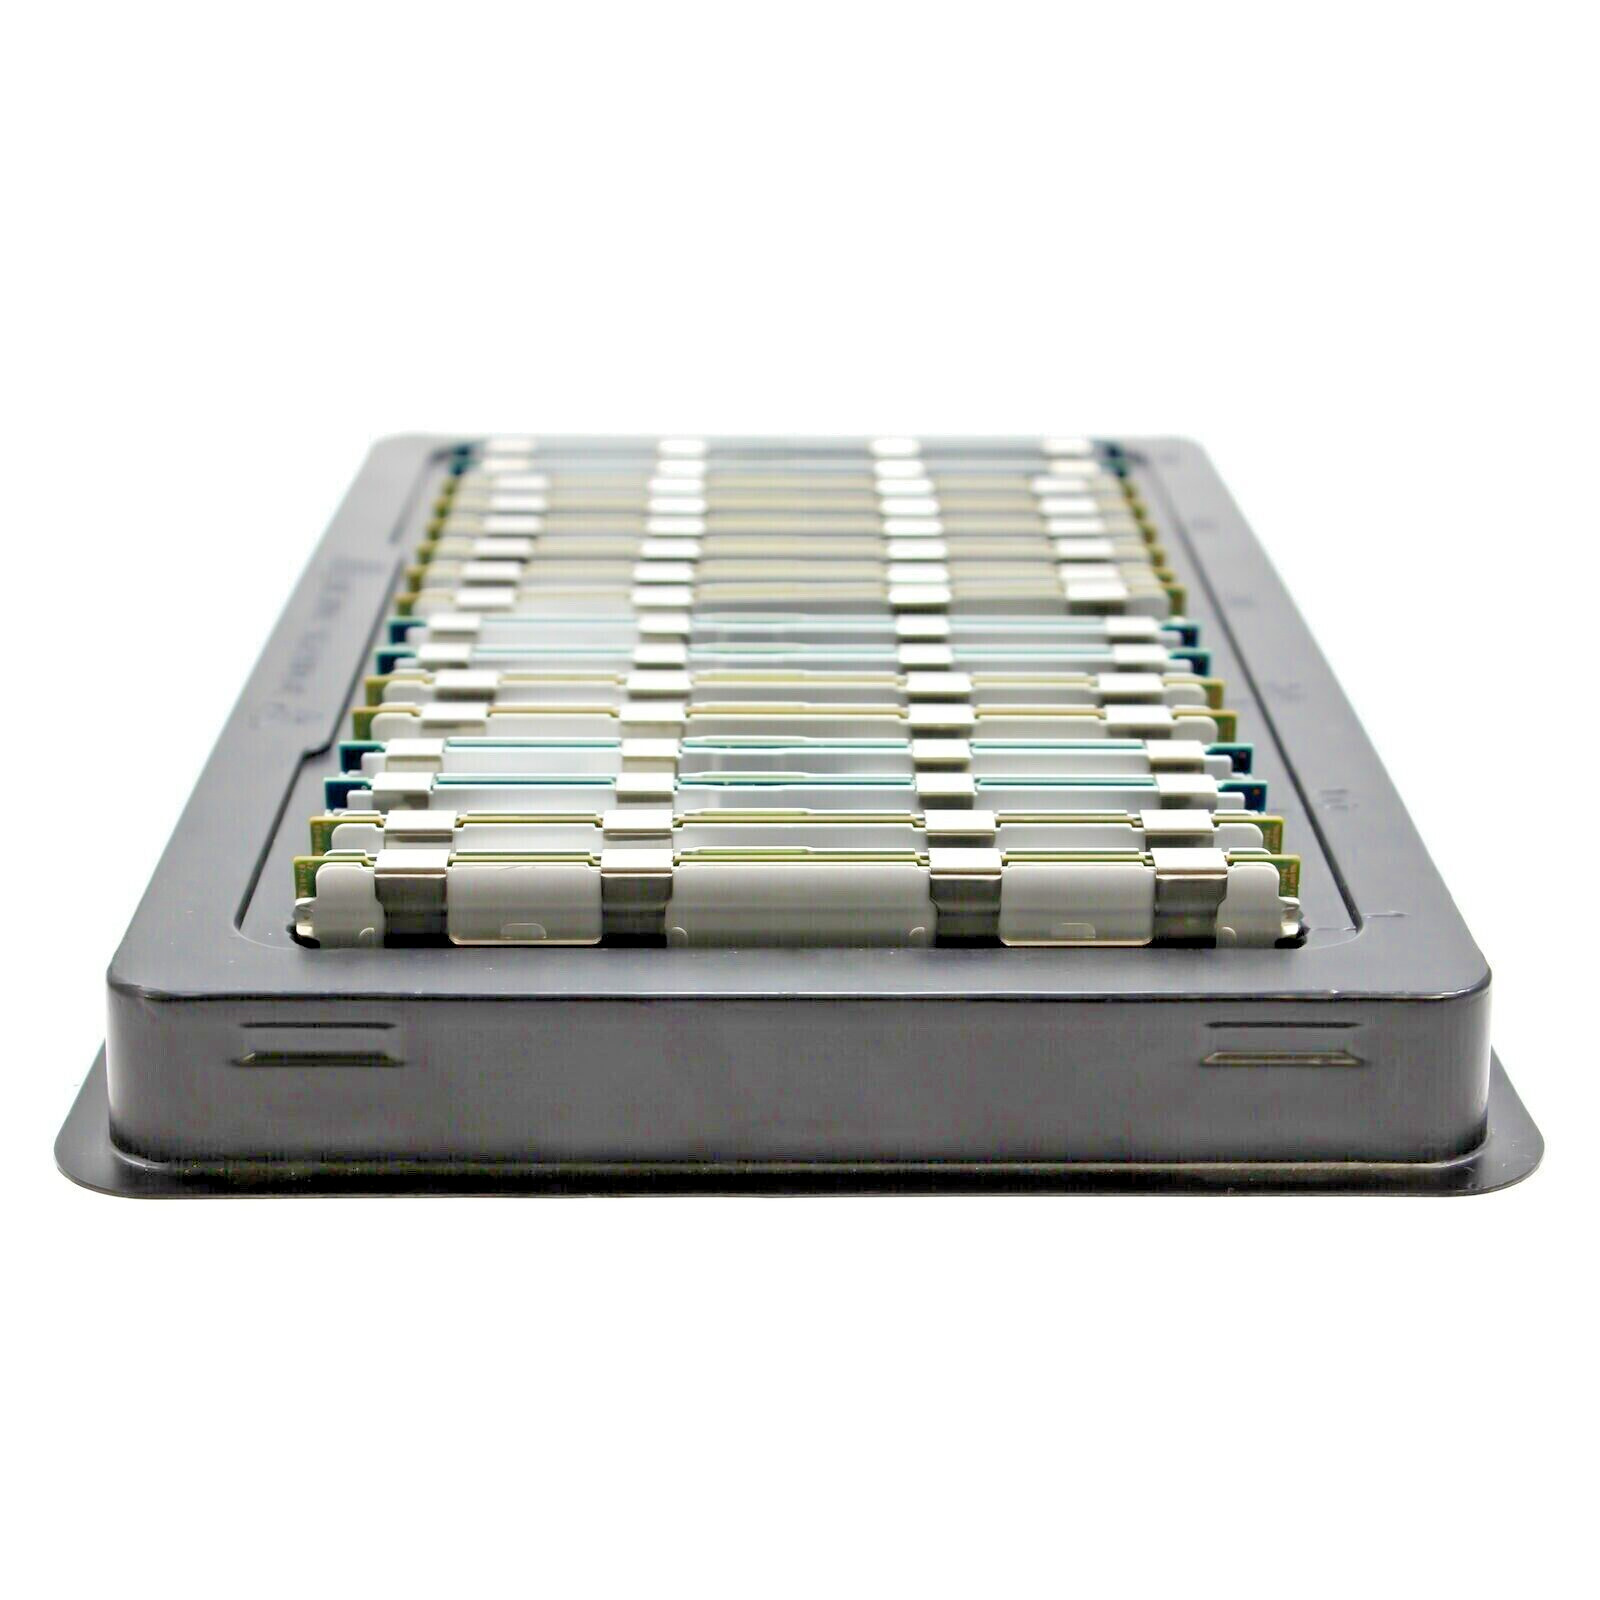 Samsung 512GB (32 x 16GB) PC3-10600R DDR3 4Rx4 ECC Reg RDIMM Memory RAM for Dell